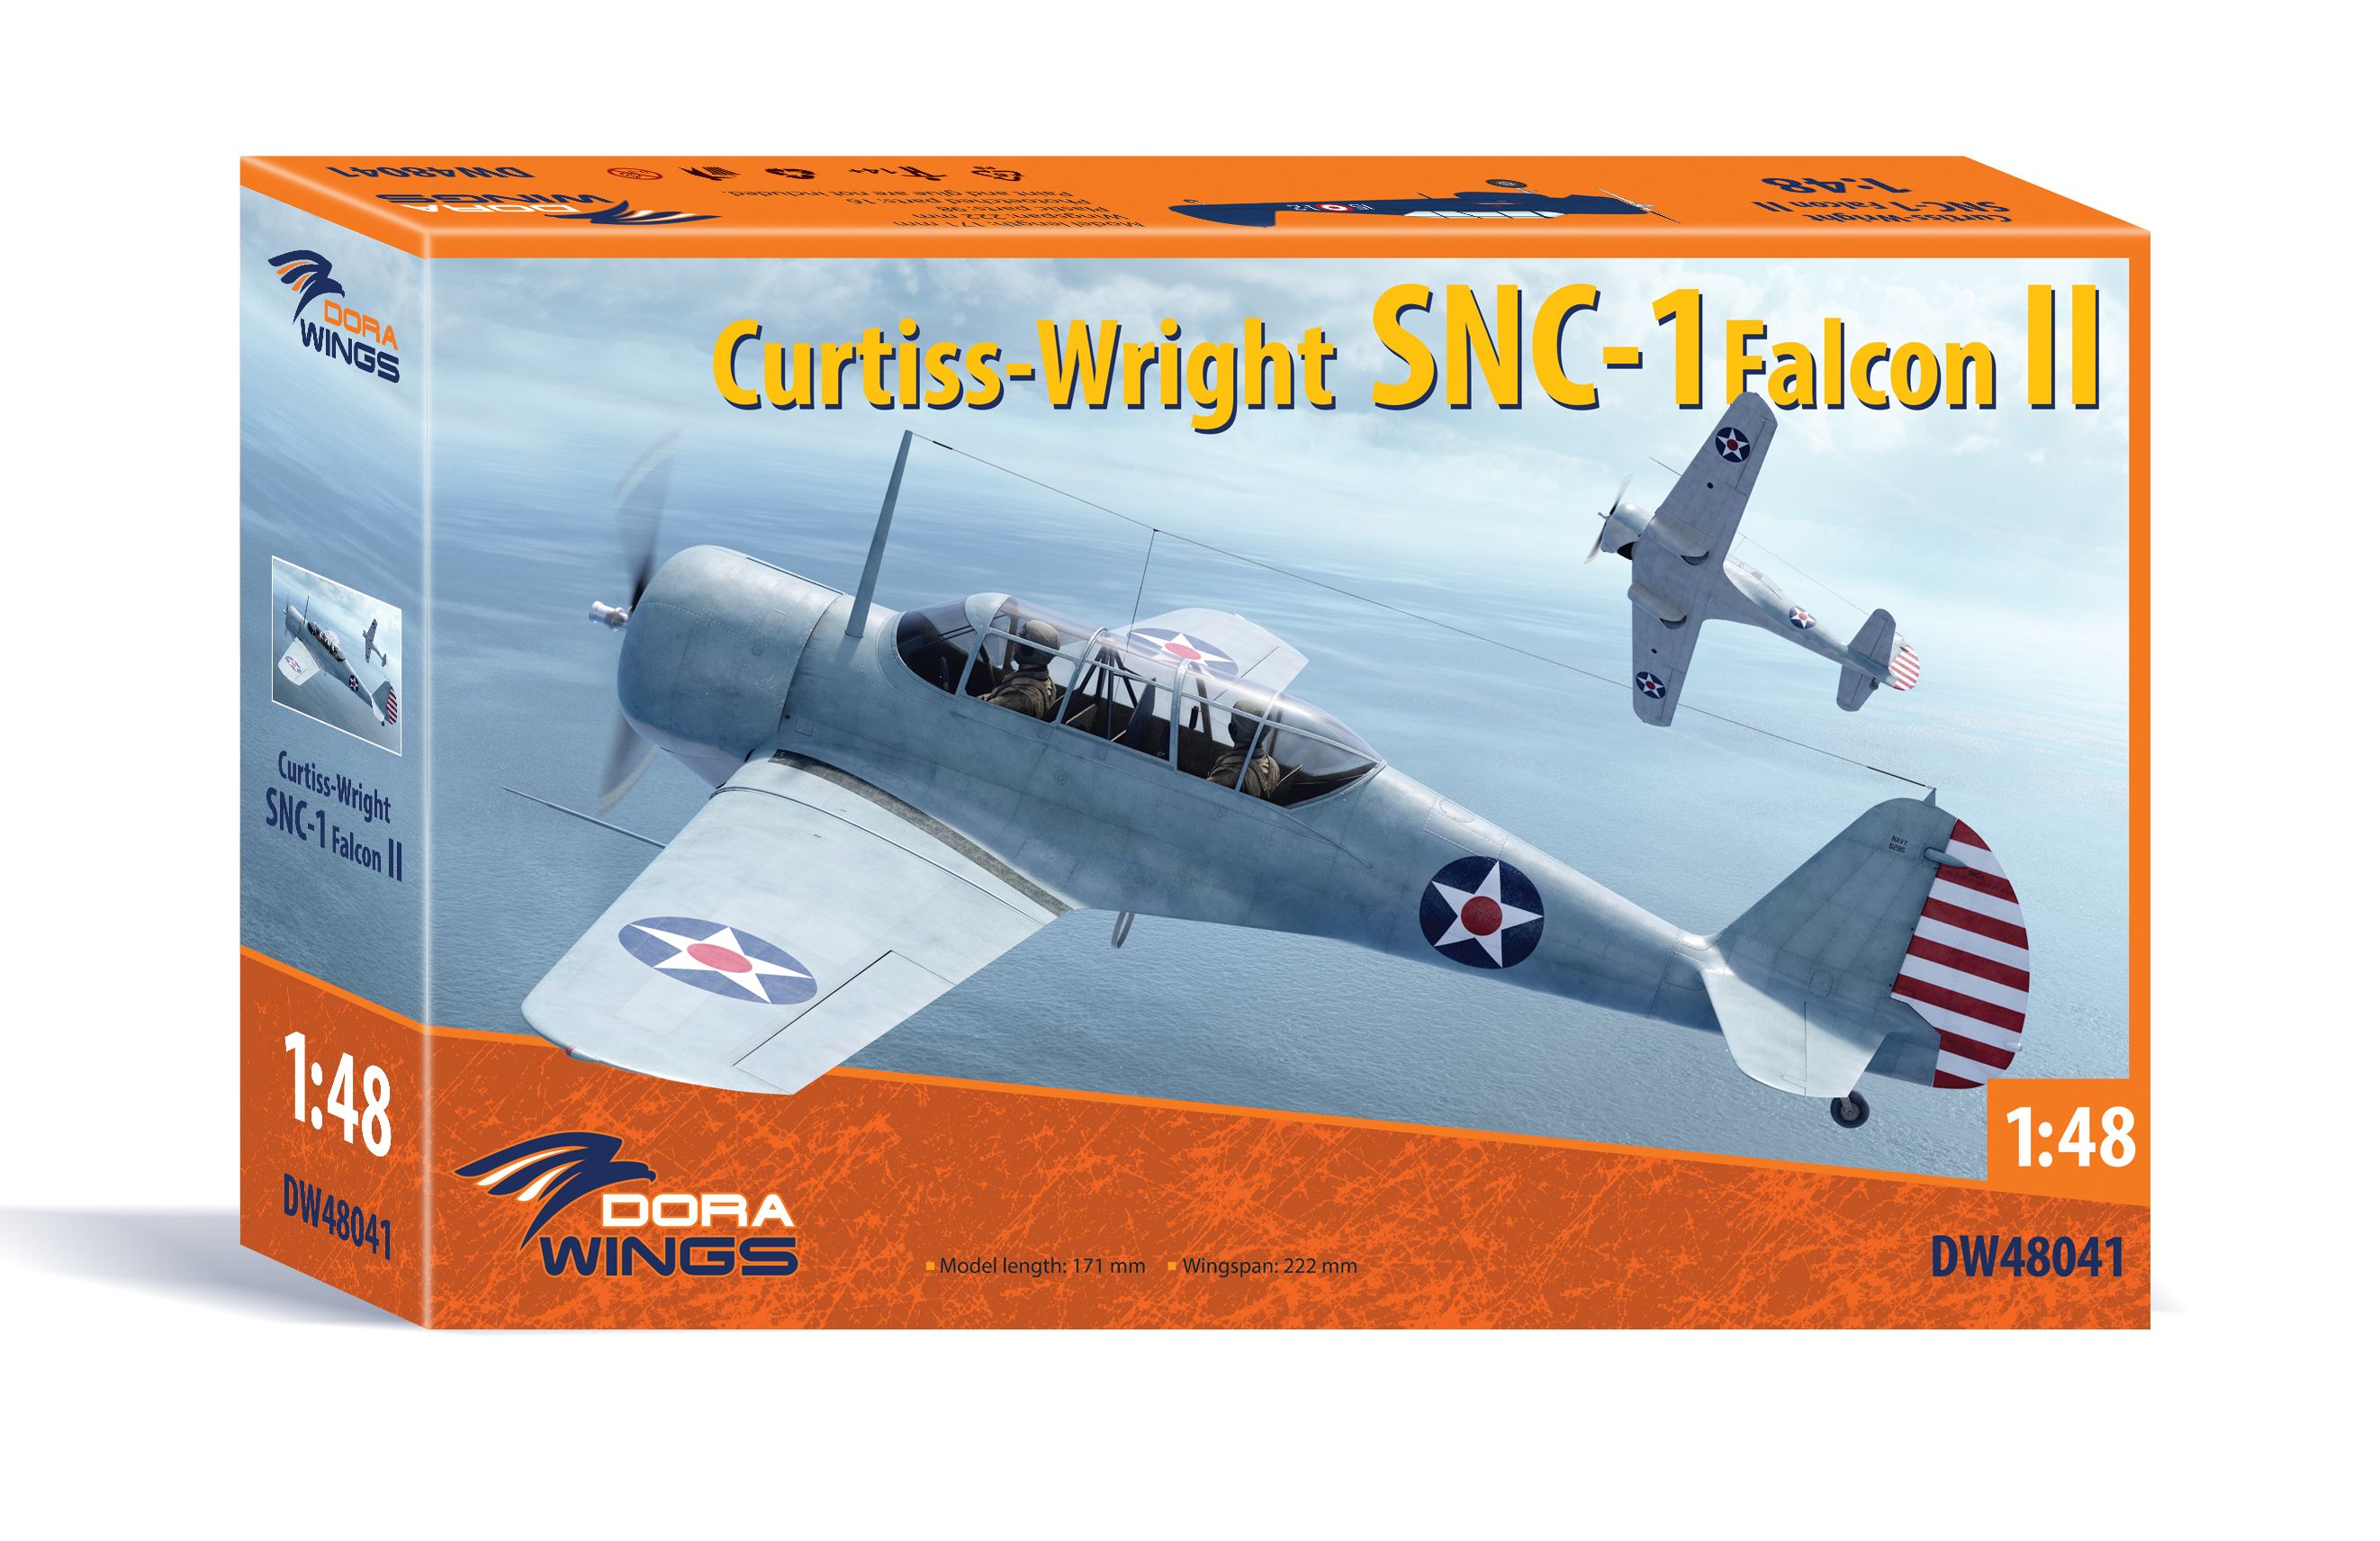 DW48041 Curtiss-Wright SNC-1 Falcon II